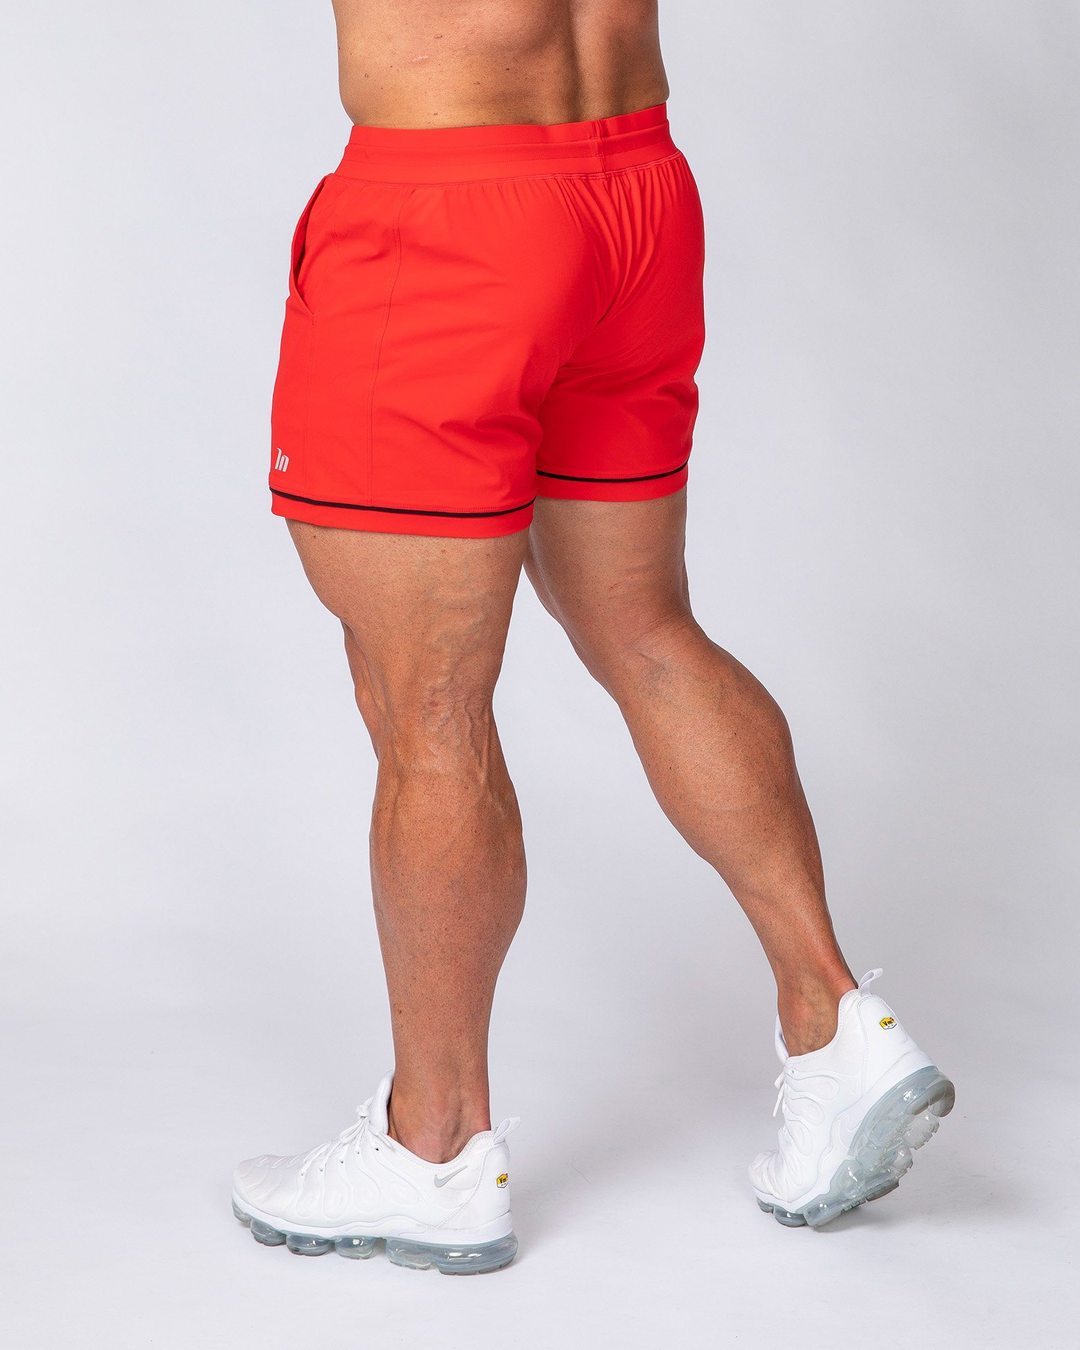 musclenation Mens Squat Shorts - Red/ Black